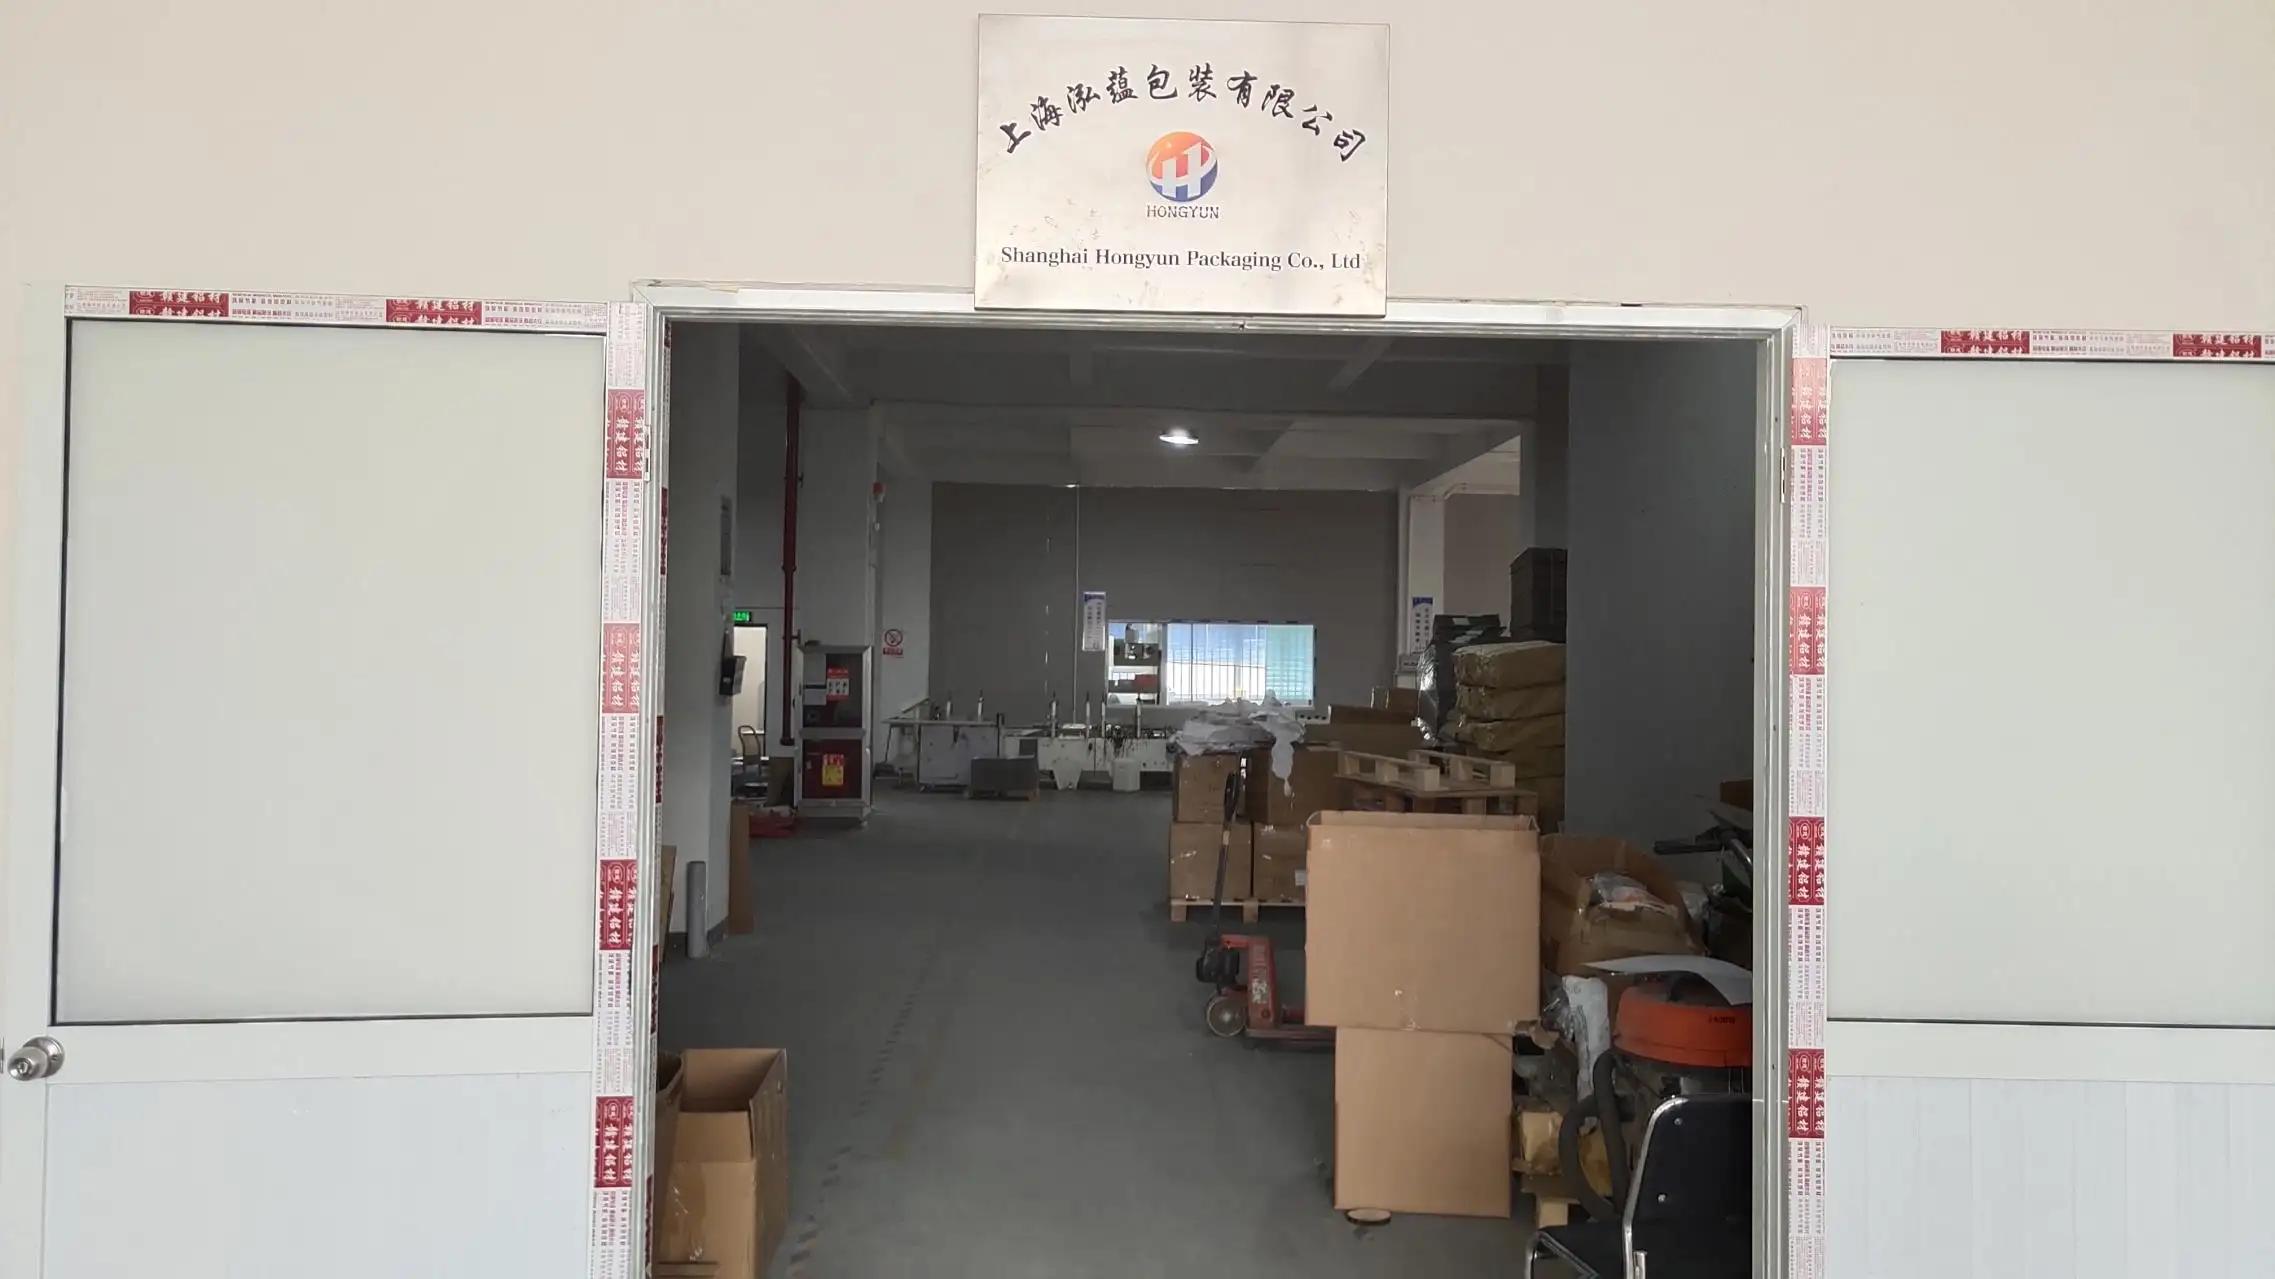 Shanghai Hongyun Packaging Co., Ltd.